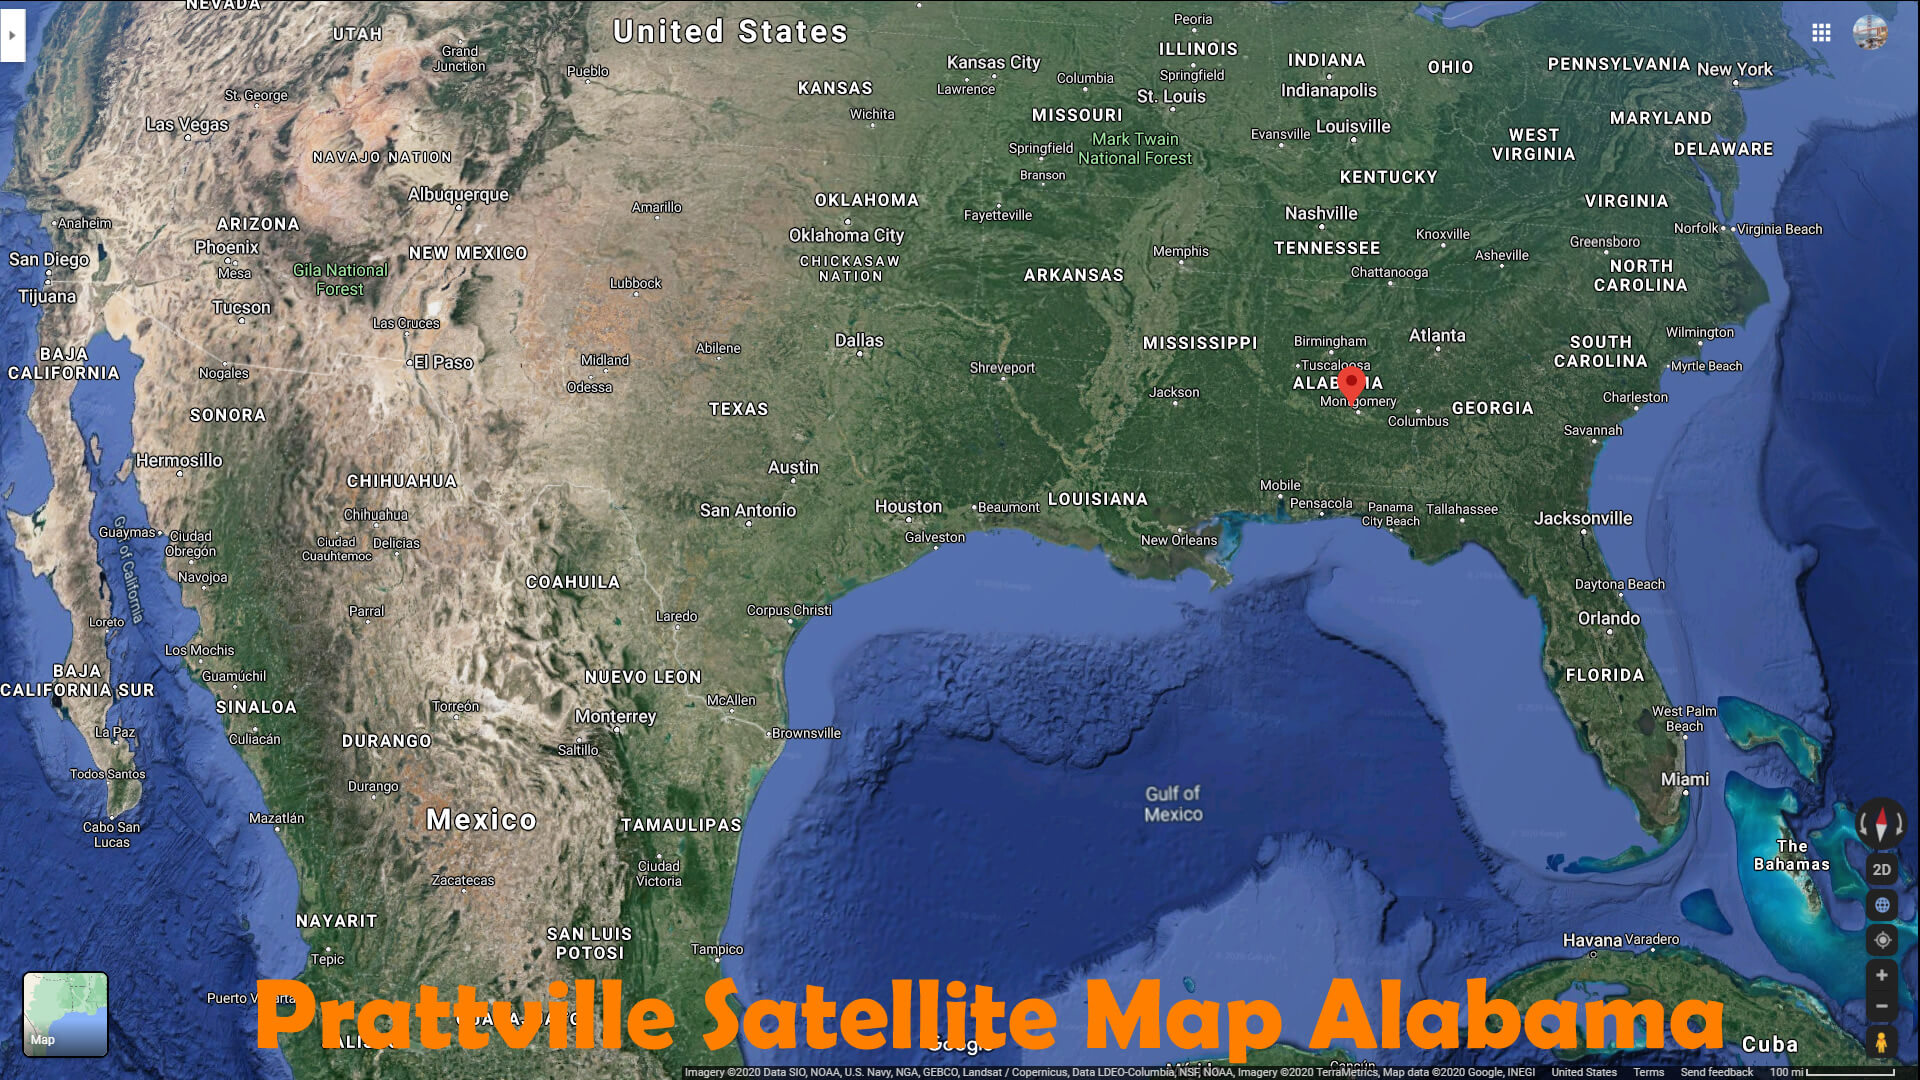 Prattville Satellite Map Alabama